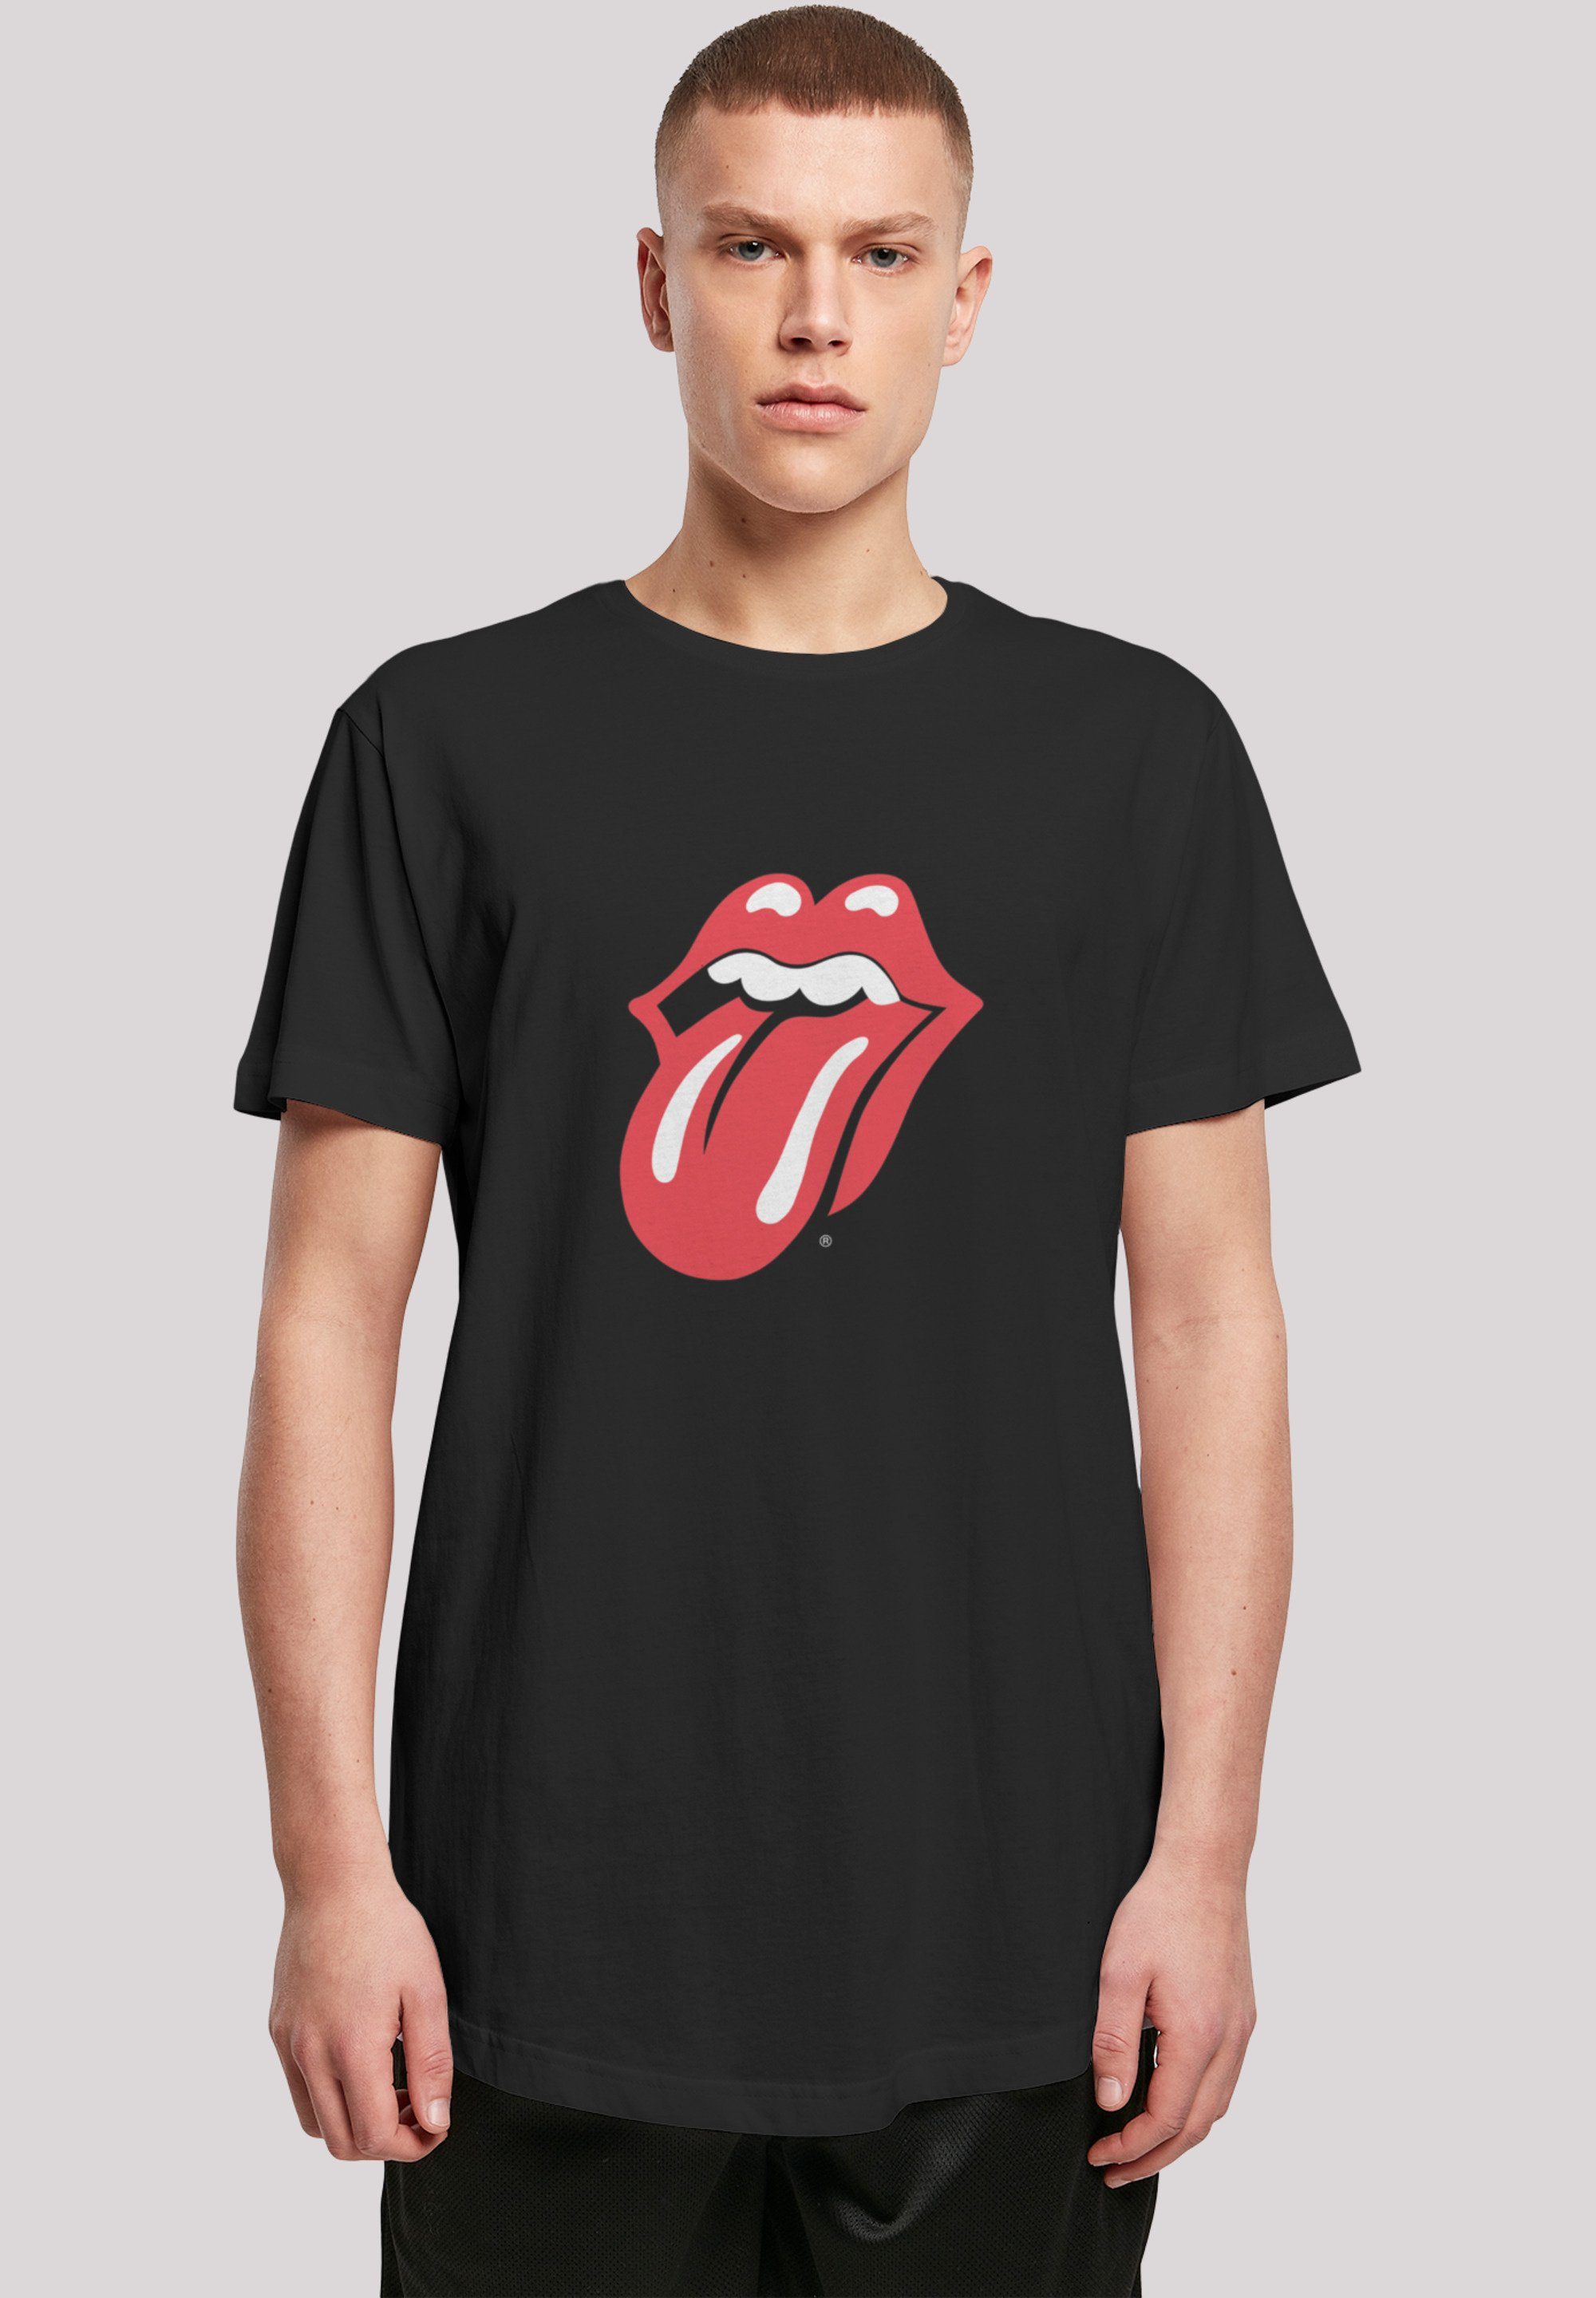 F4NT4STIC T-Shirt The Rolling Classic Stones Black Tongue Print Rockband